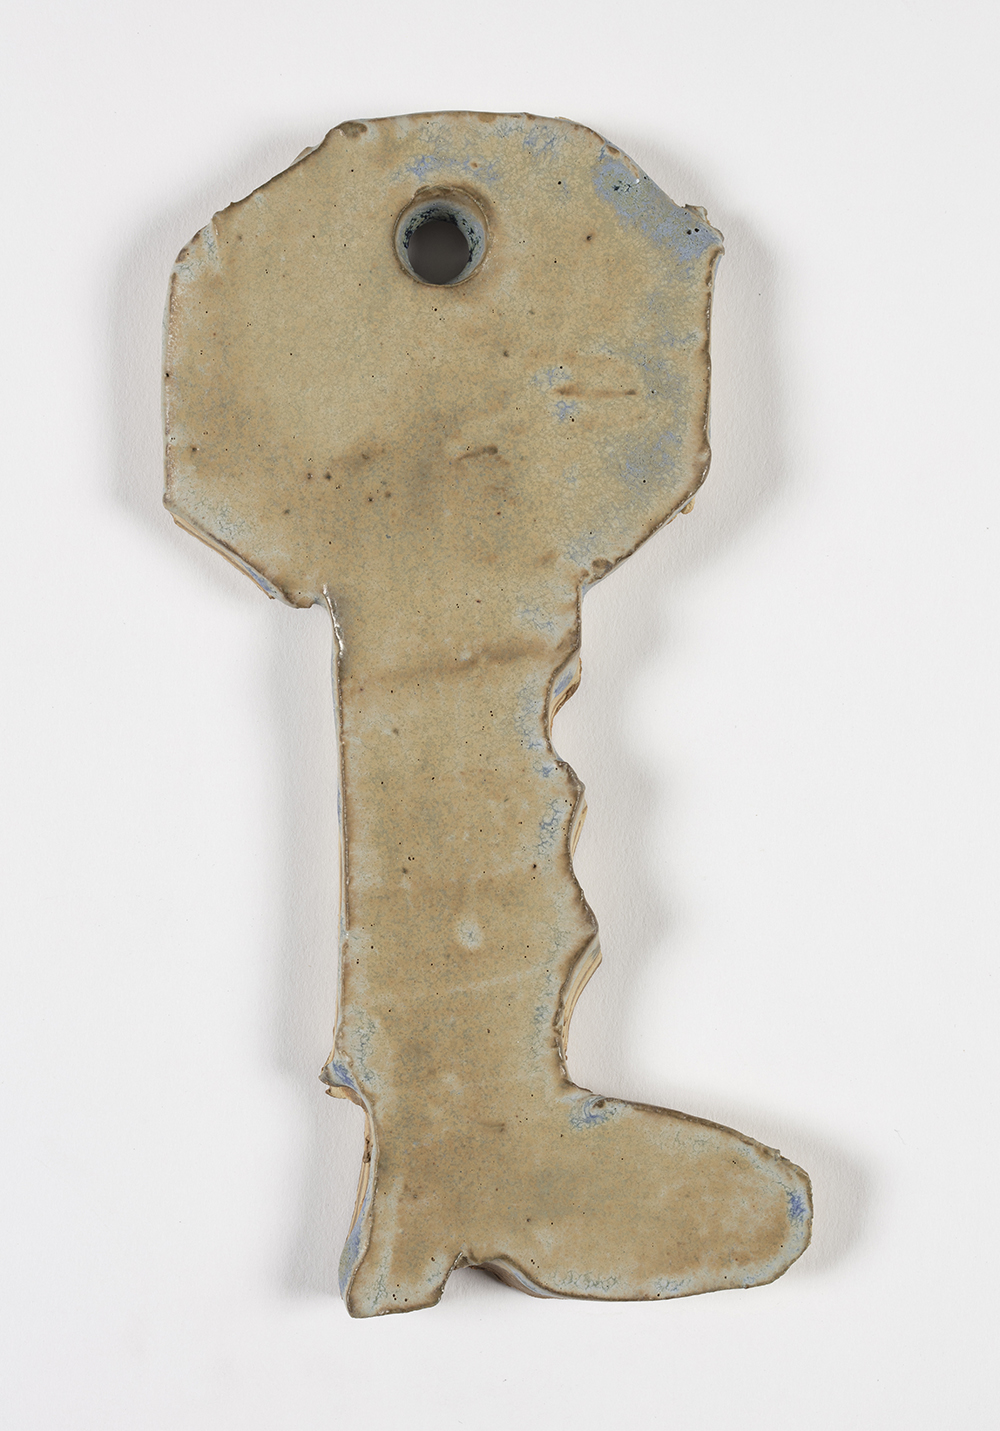 Kevin McNamee-Tweed.<em> Key (Boot)</em>, 2019. Glazed ceramic, 6 1/2 x 3 inches (16.5 x 7.6 cm)